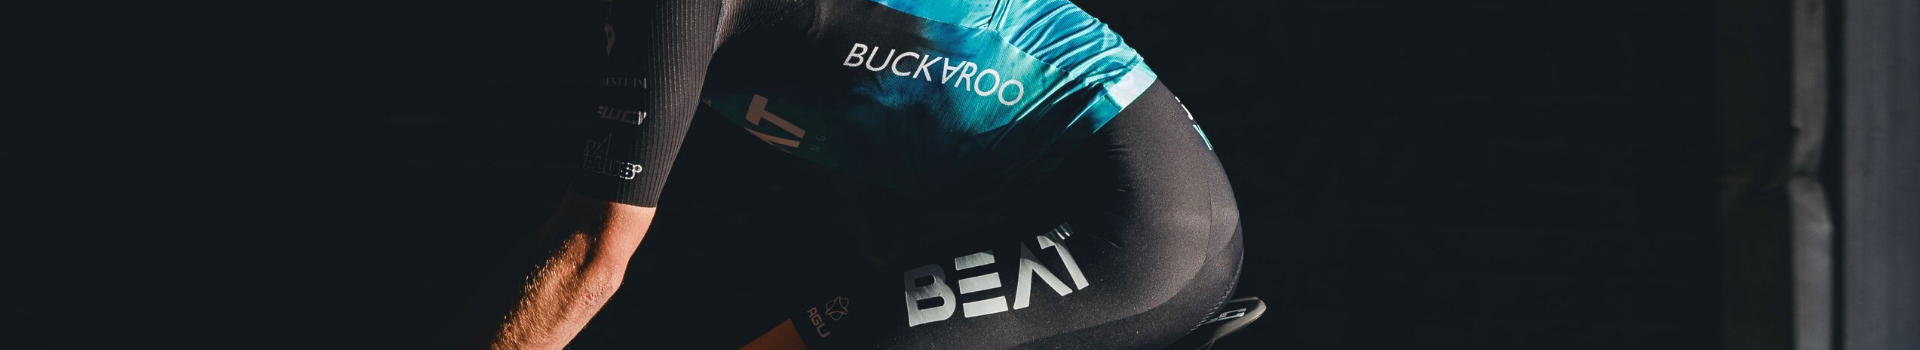 Buckaroo nieuwe sponsor BEAT Cycling